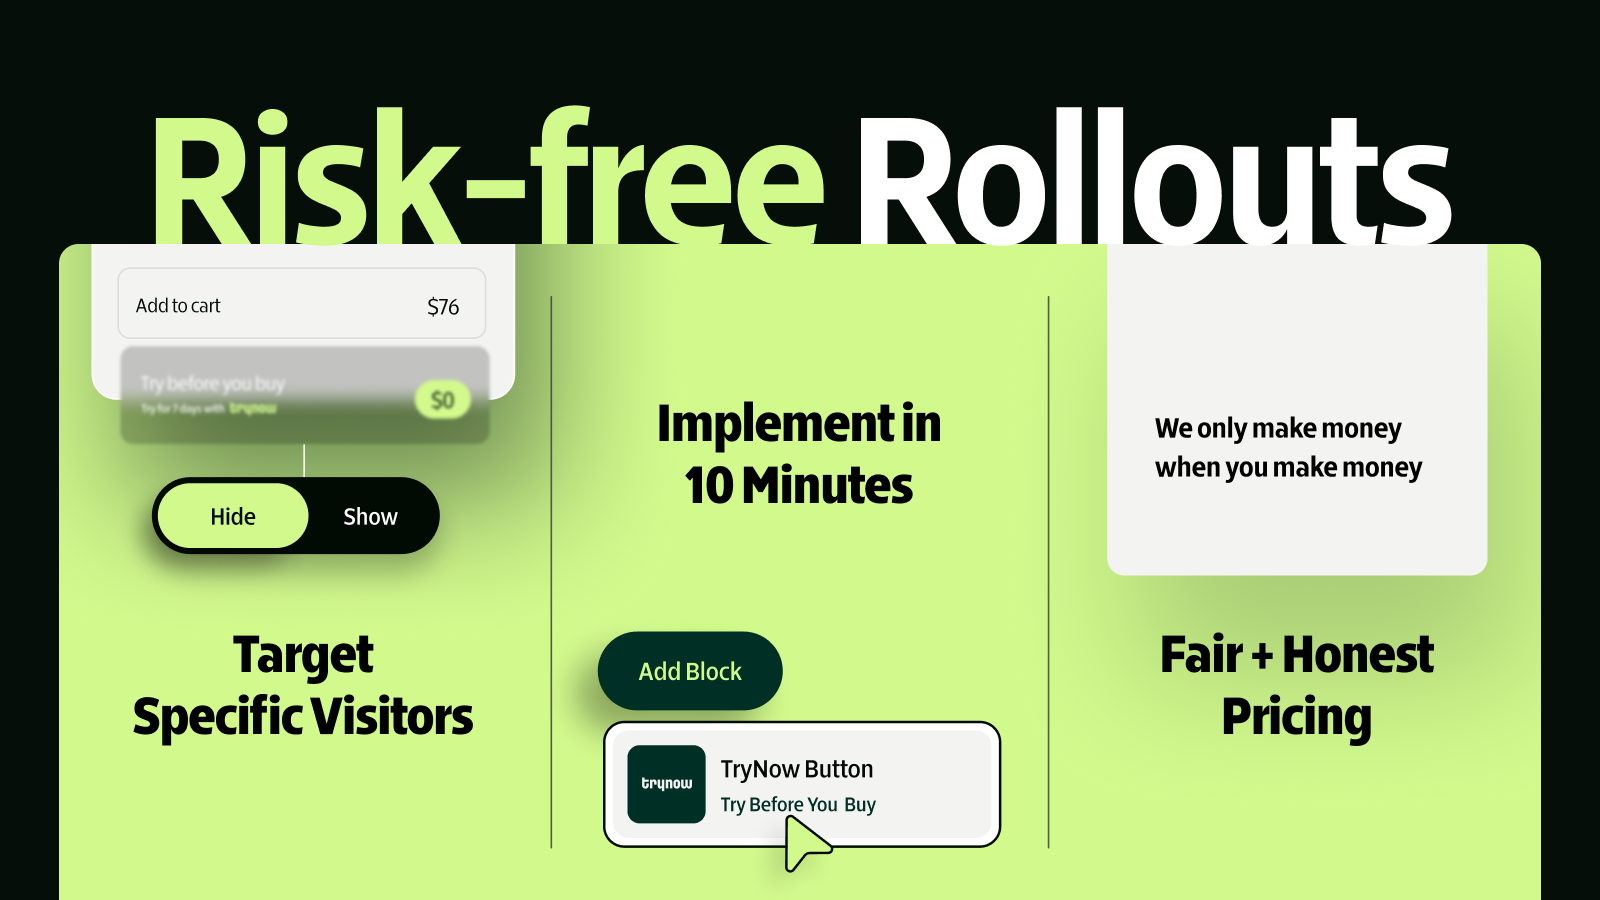 Risk-free rollouts.